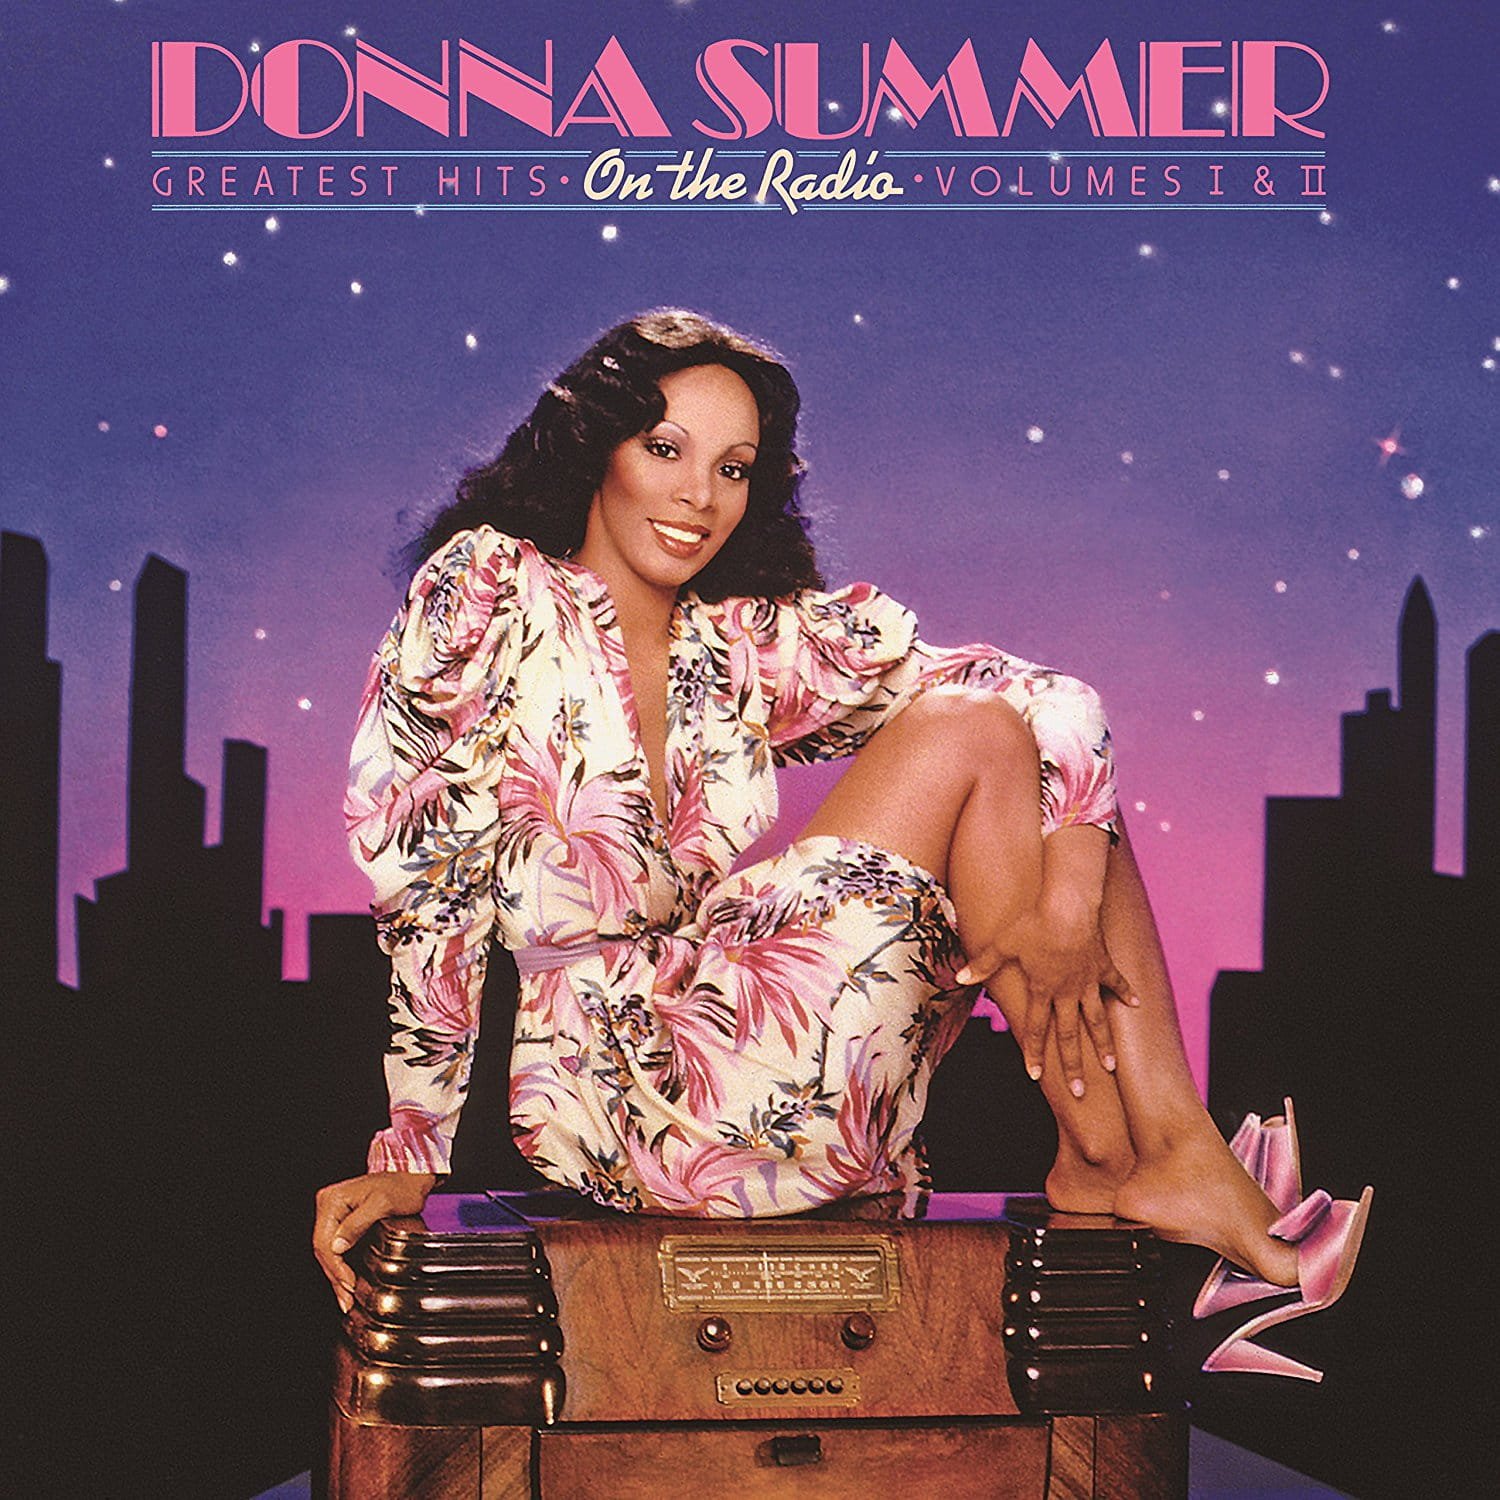 On the Radio: Greatest Hits Volumes I & II — Donna Summer | Last.fm